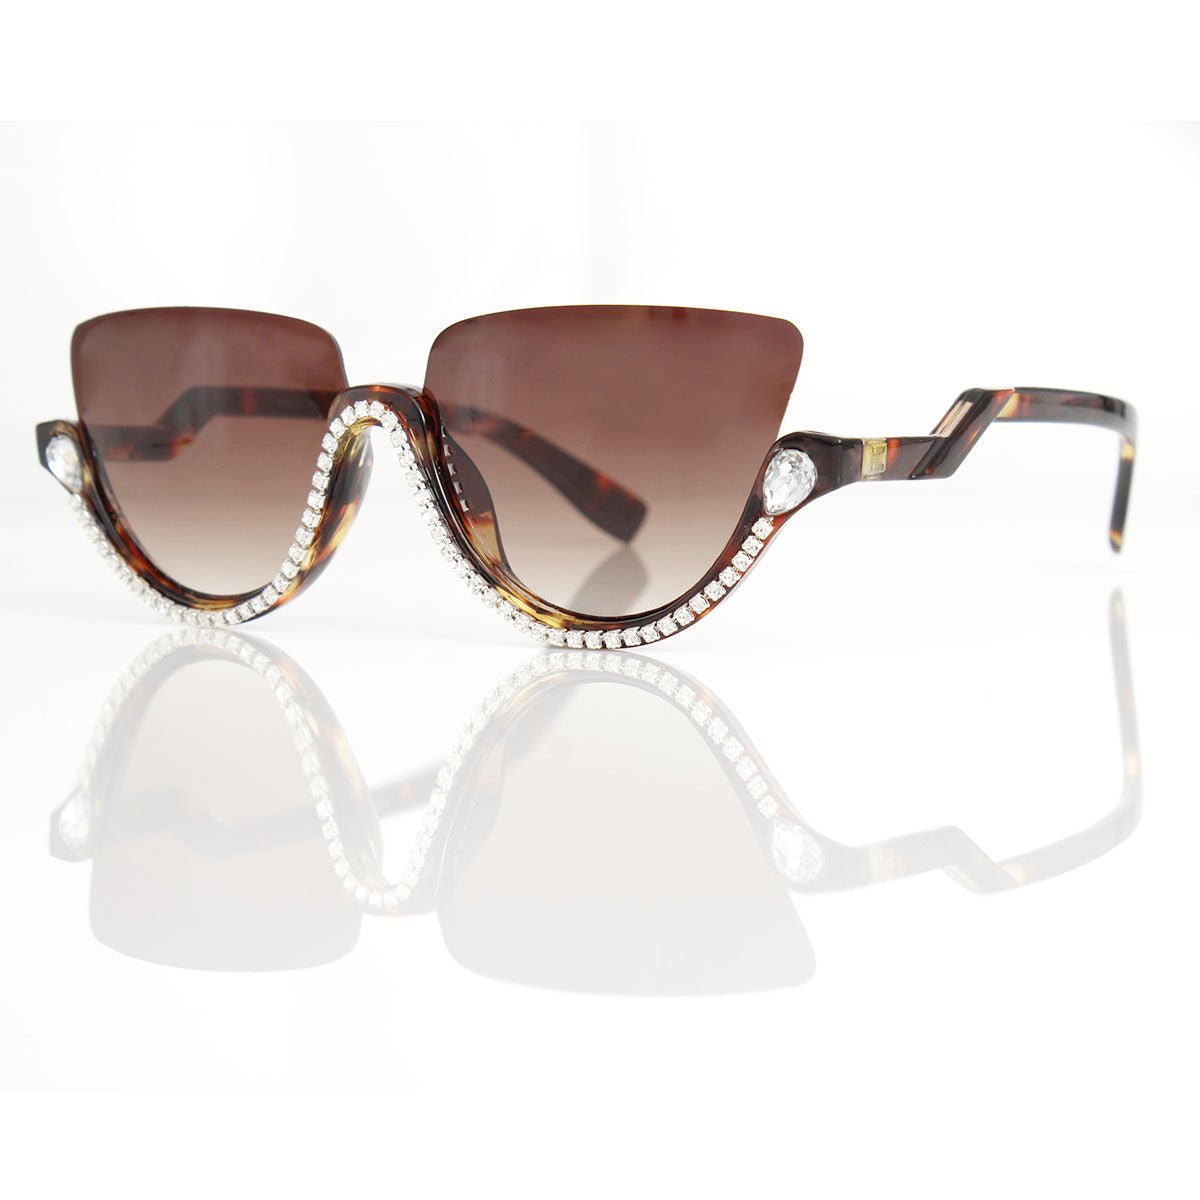 Sunglasses Half Frame Tortoiseshell Eyewear Women - Bae Apparel